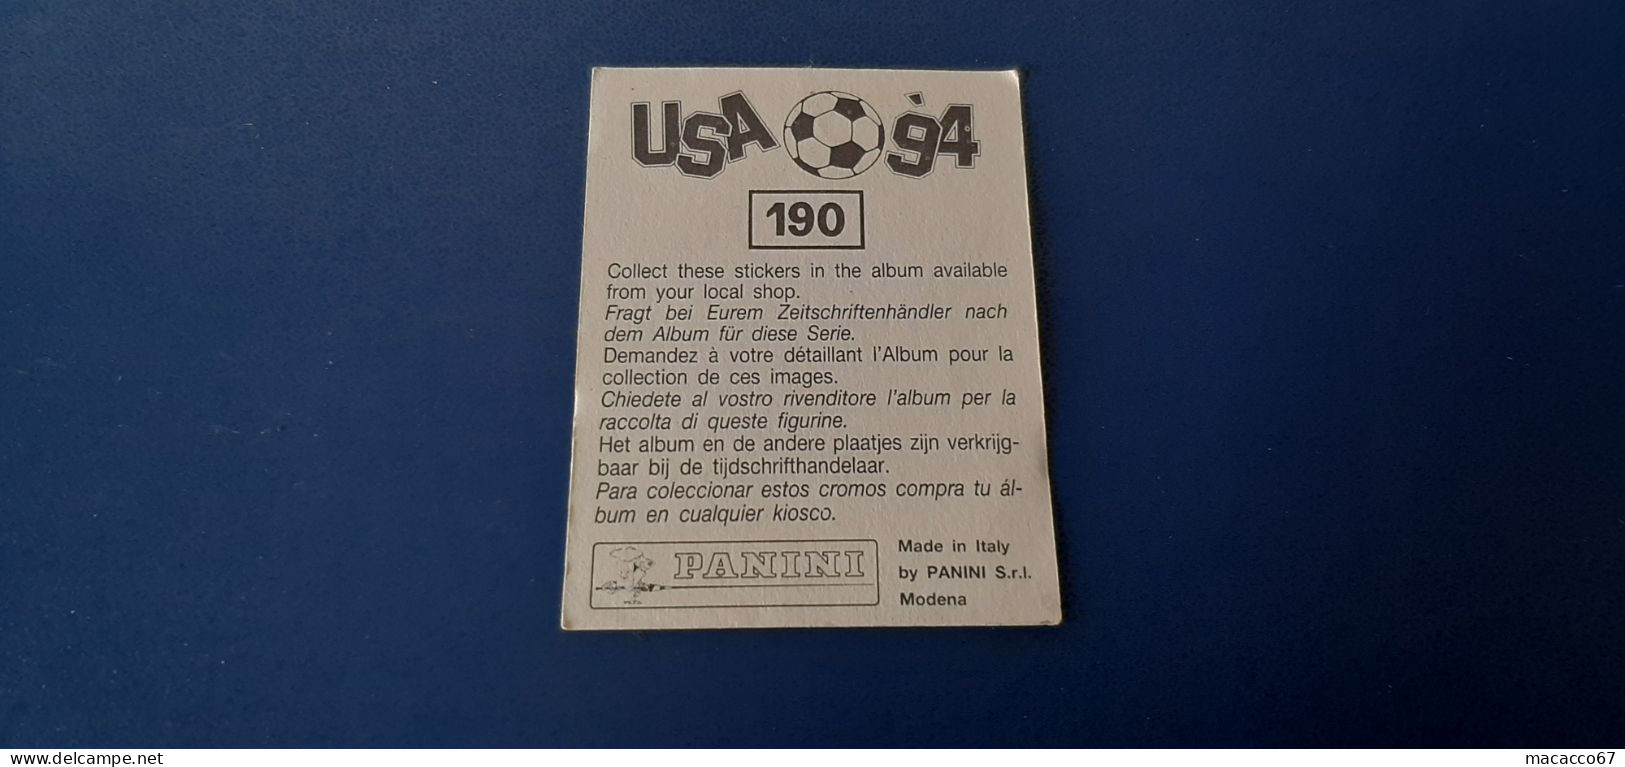 Figurina Panini WM USA 94 - 190 Alcorta Spagna - Edition Italienne